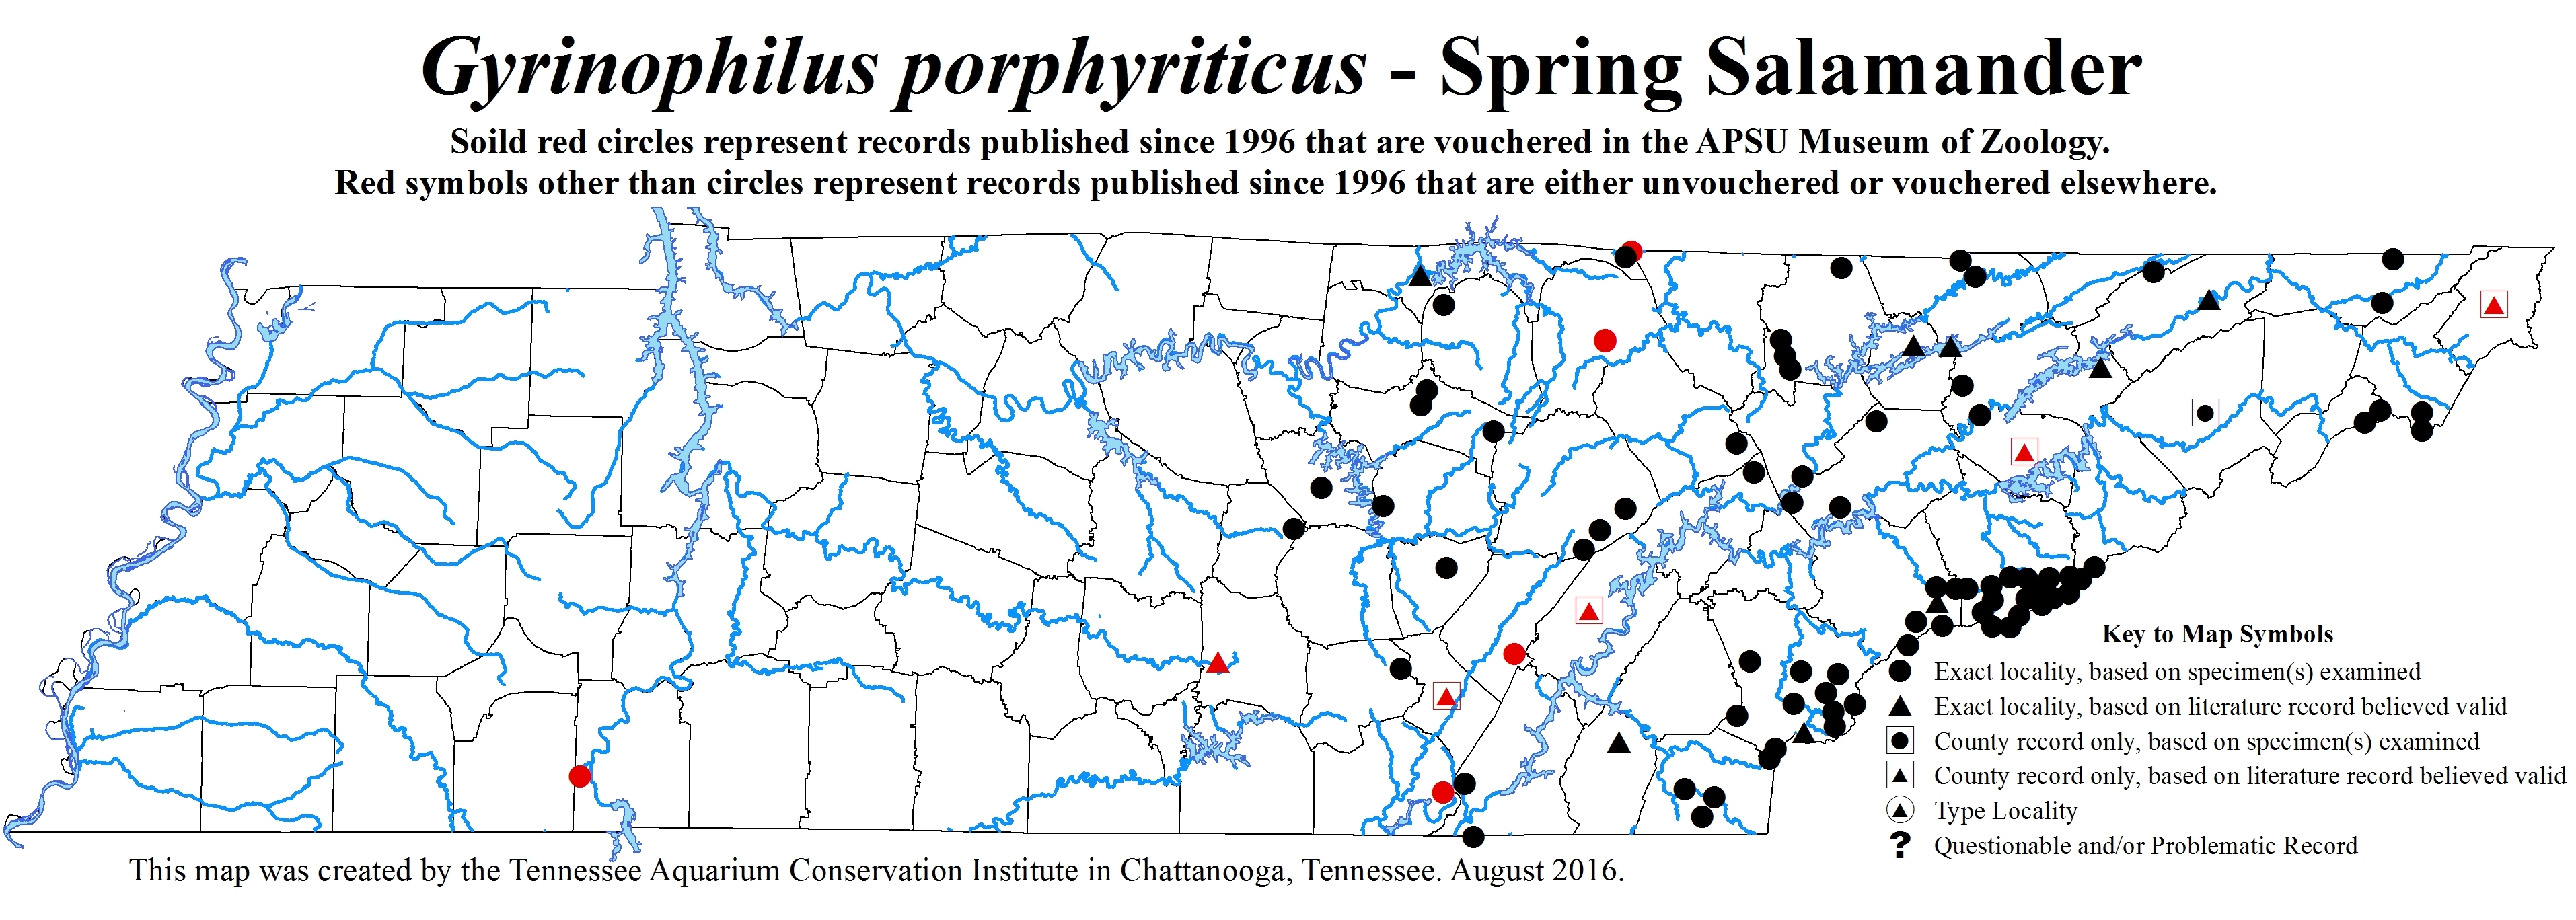 New Distribution Map - Gyrinophilus porphyriticus (Green) - Spring Salamander